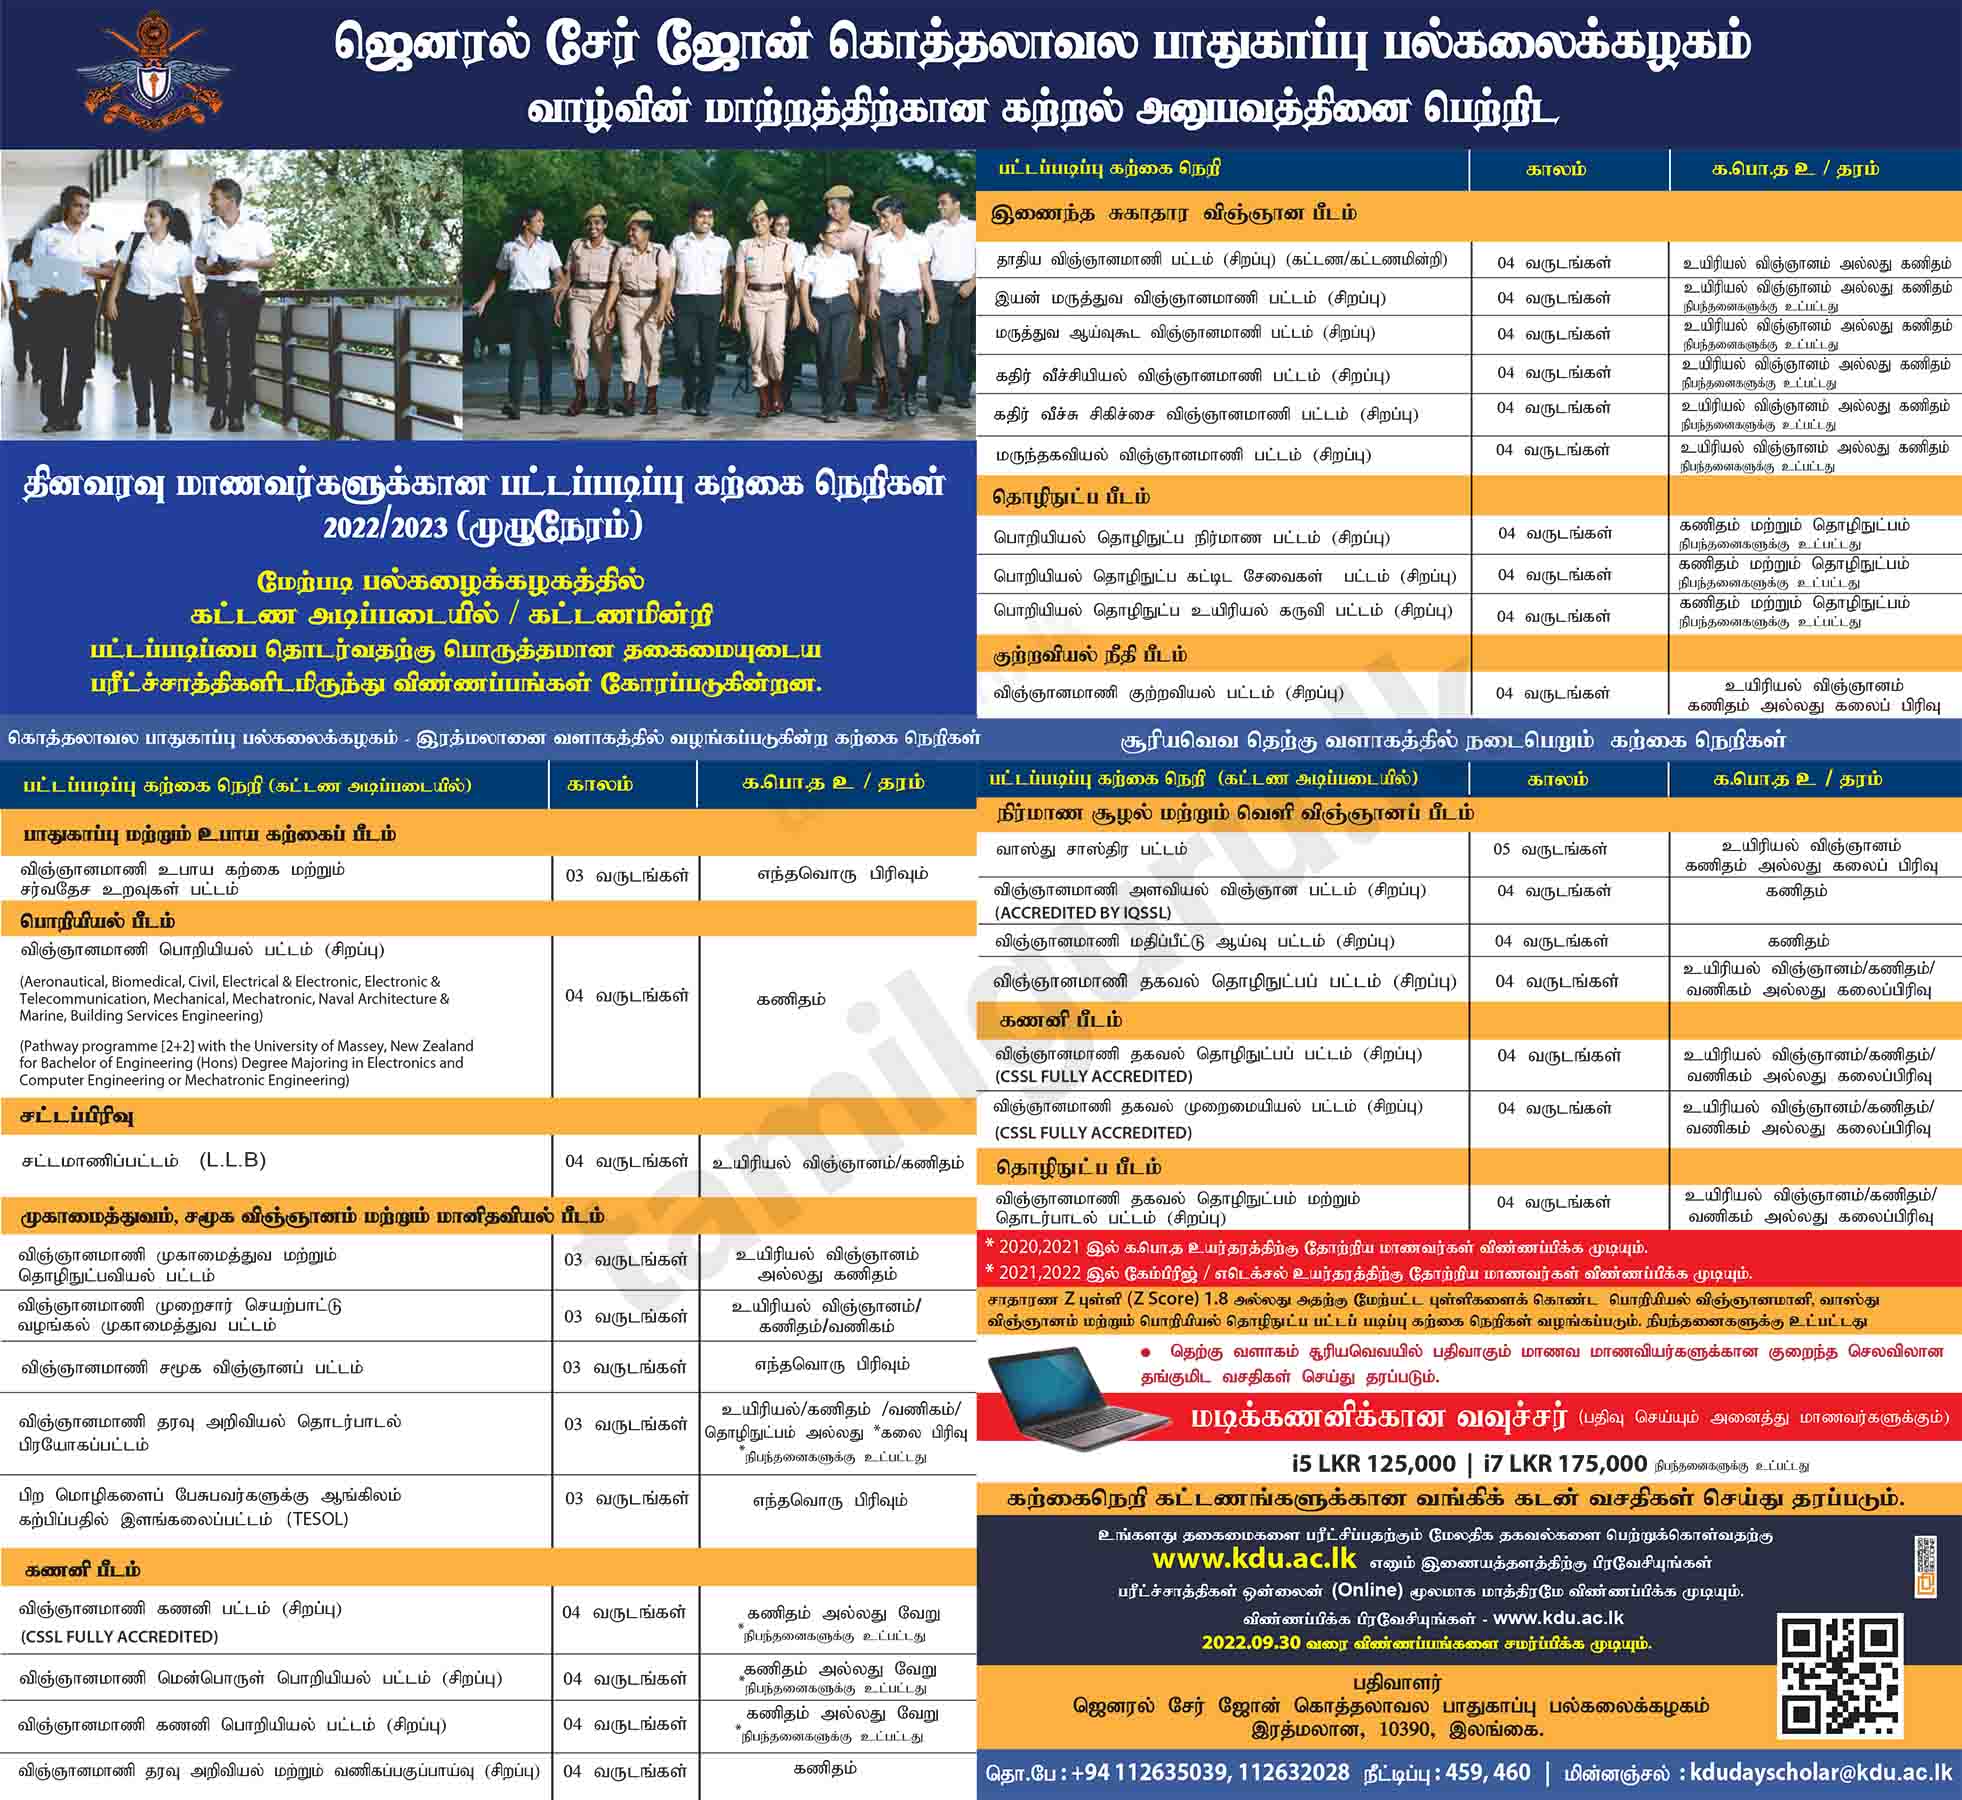 Admission for Degree Programmes 2022/2023 (Intake 40) - Kotelawala Defence University (KDU)